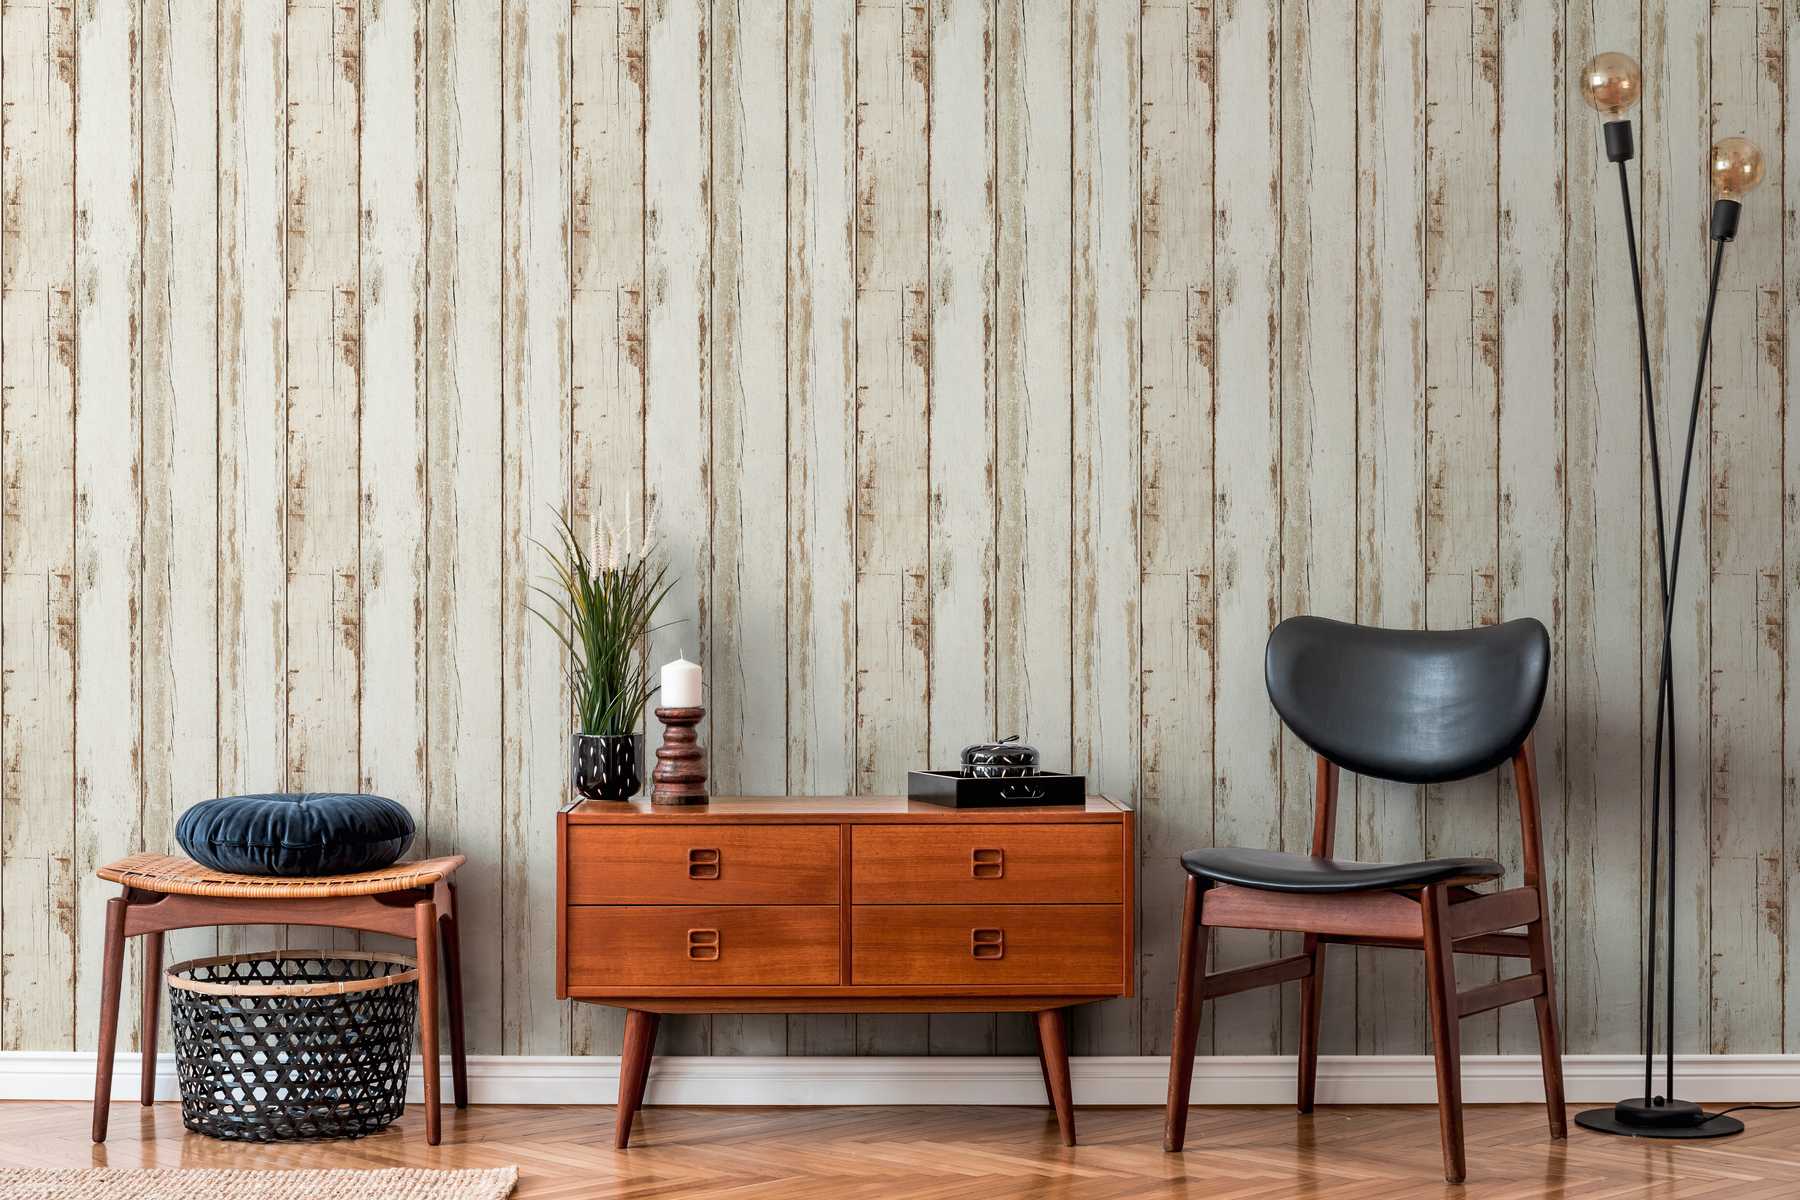             Vintage wood wallpaper, used look, rustic country style - cream, brown
        